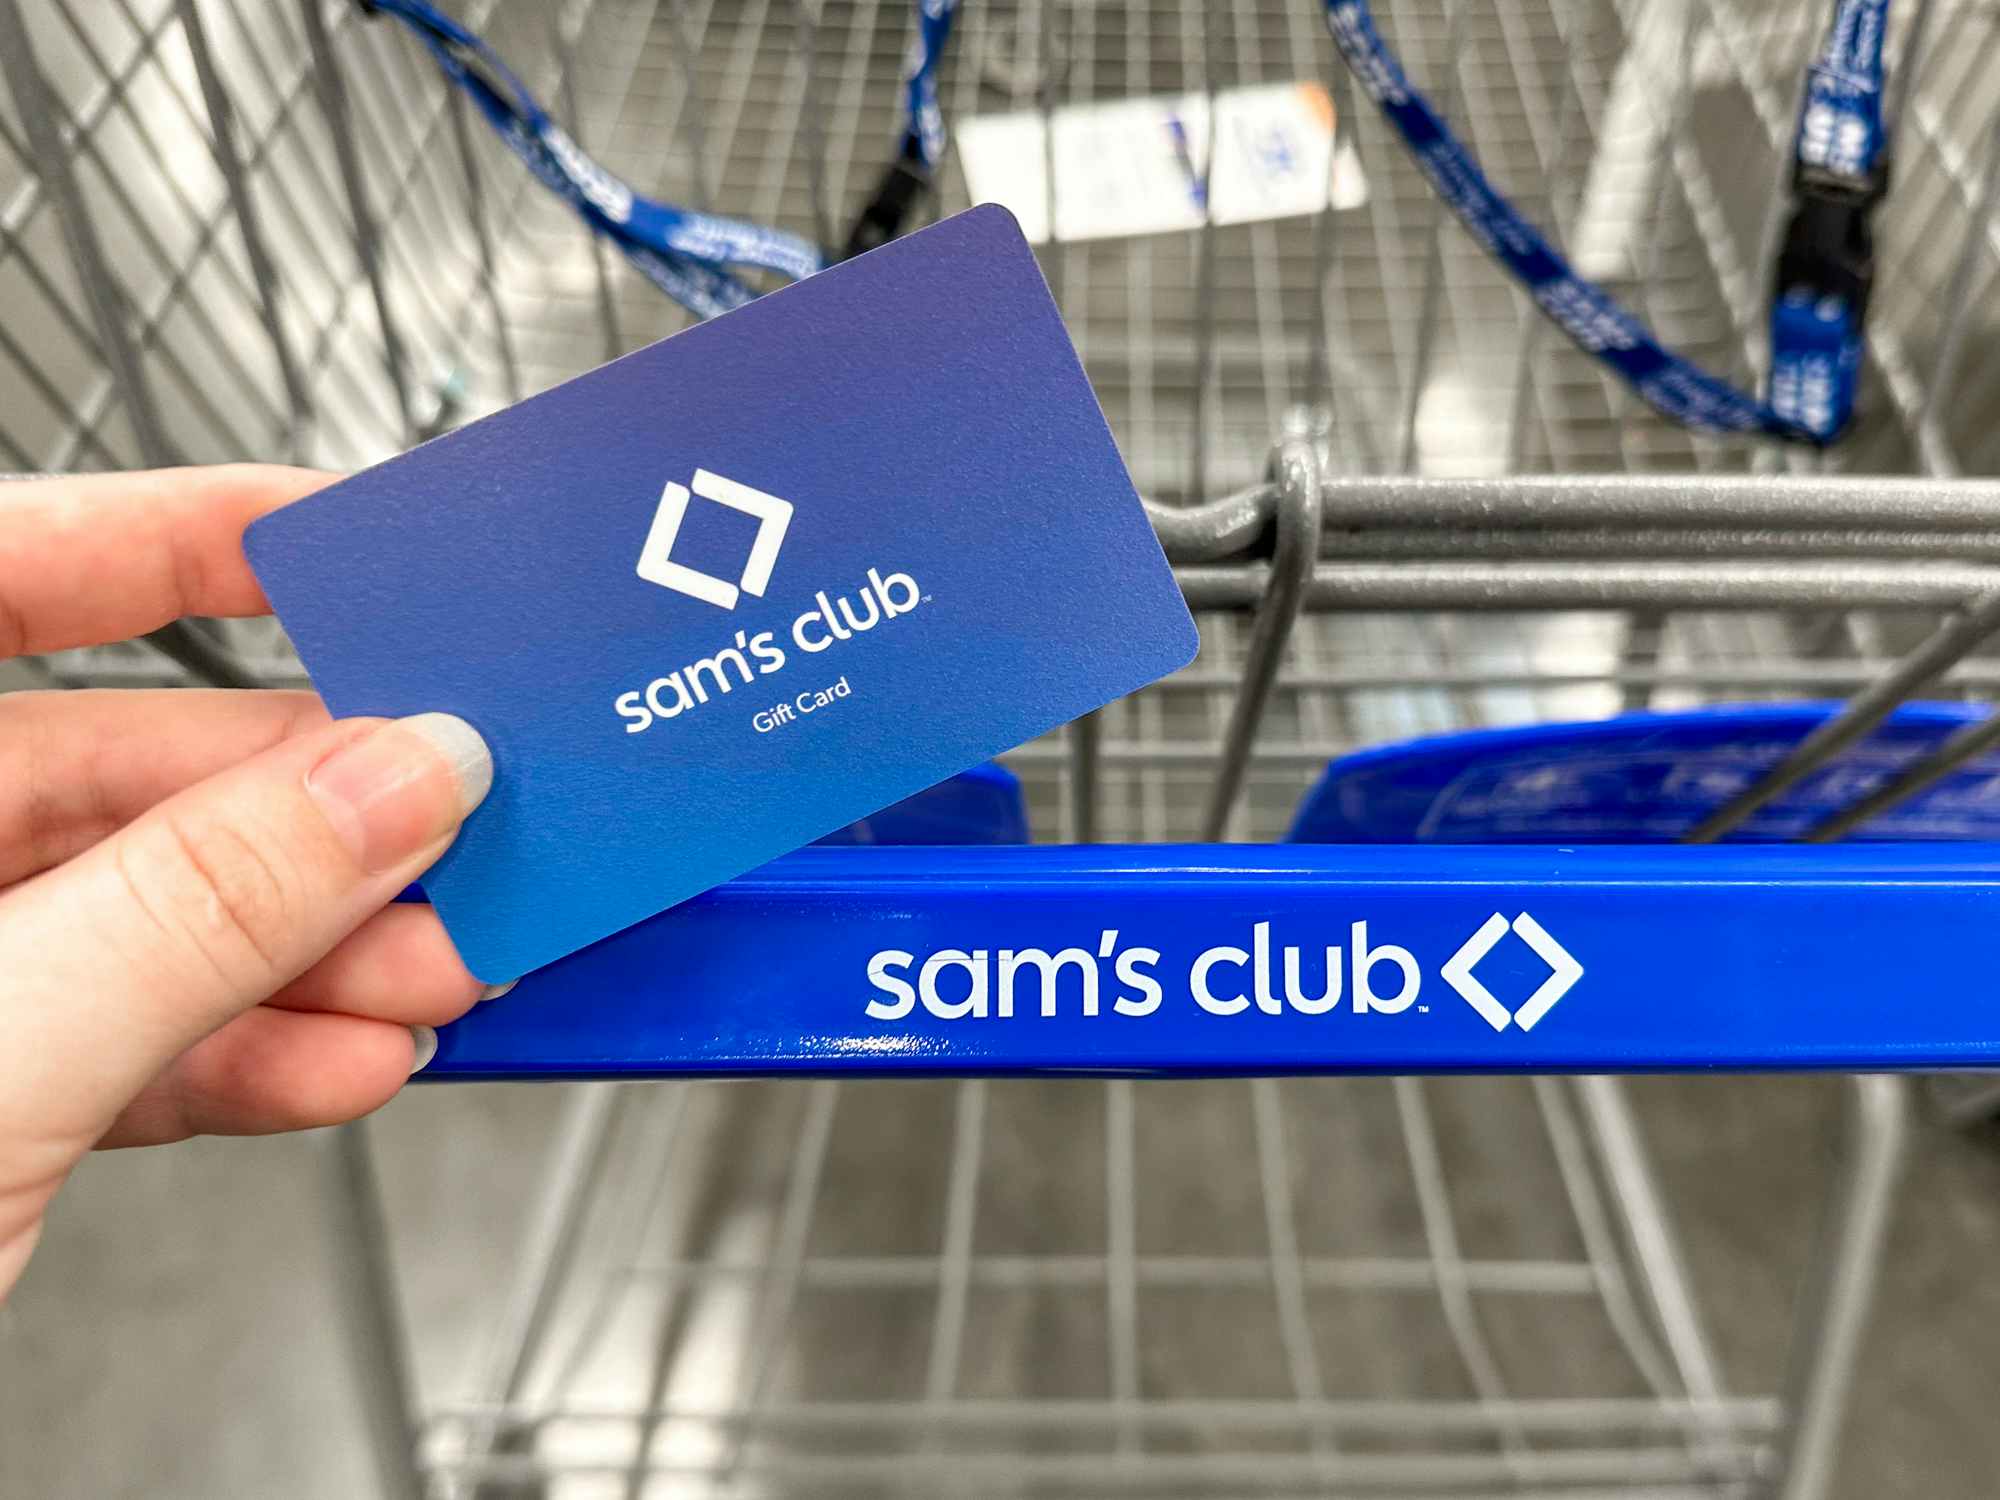 Someone holding a Sam's Club gift card near a cart